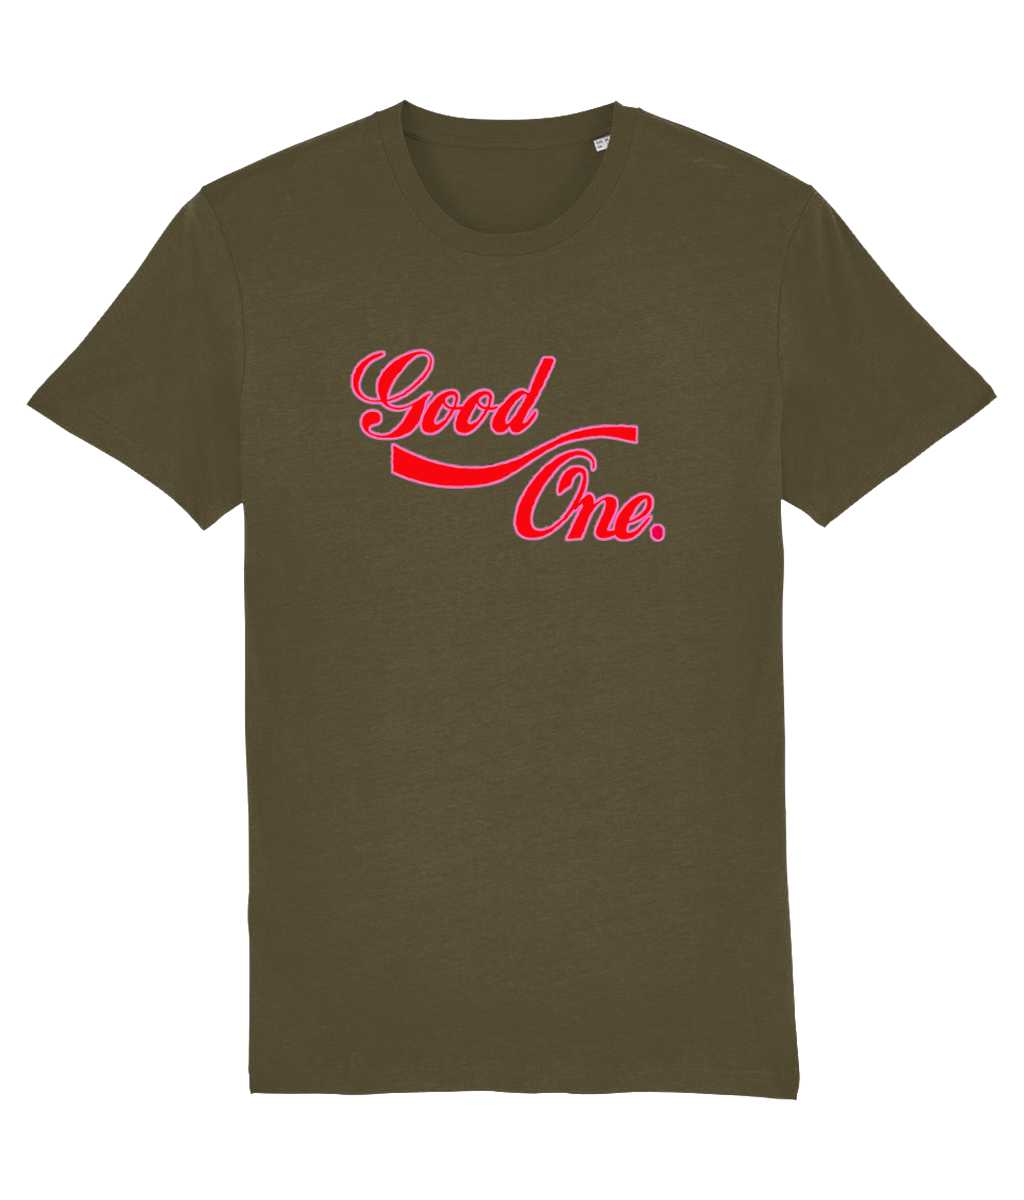 Good One Non Gender T Shirt Cherchez La Femme brand